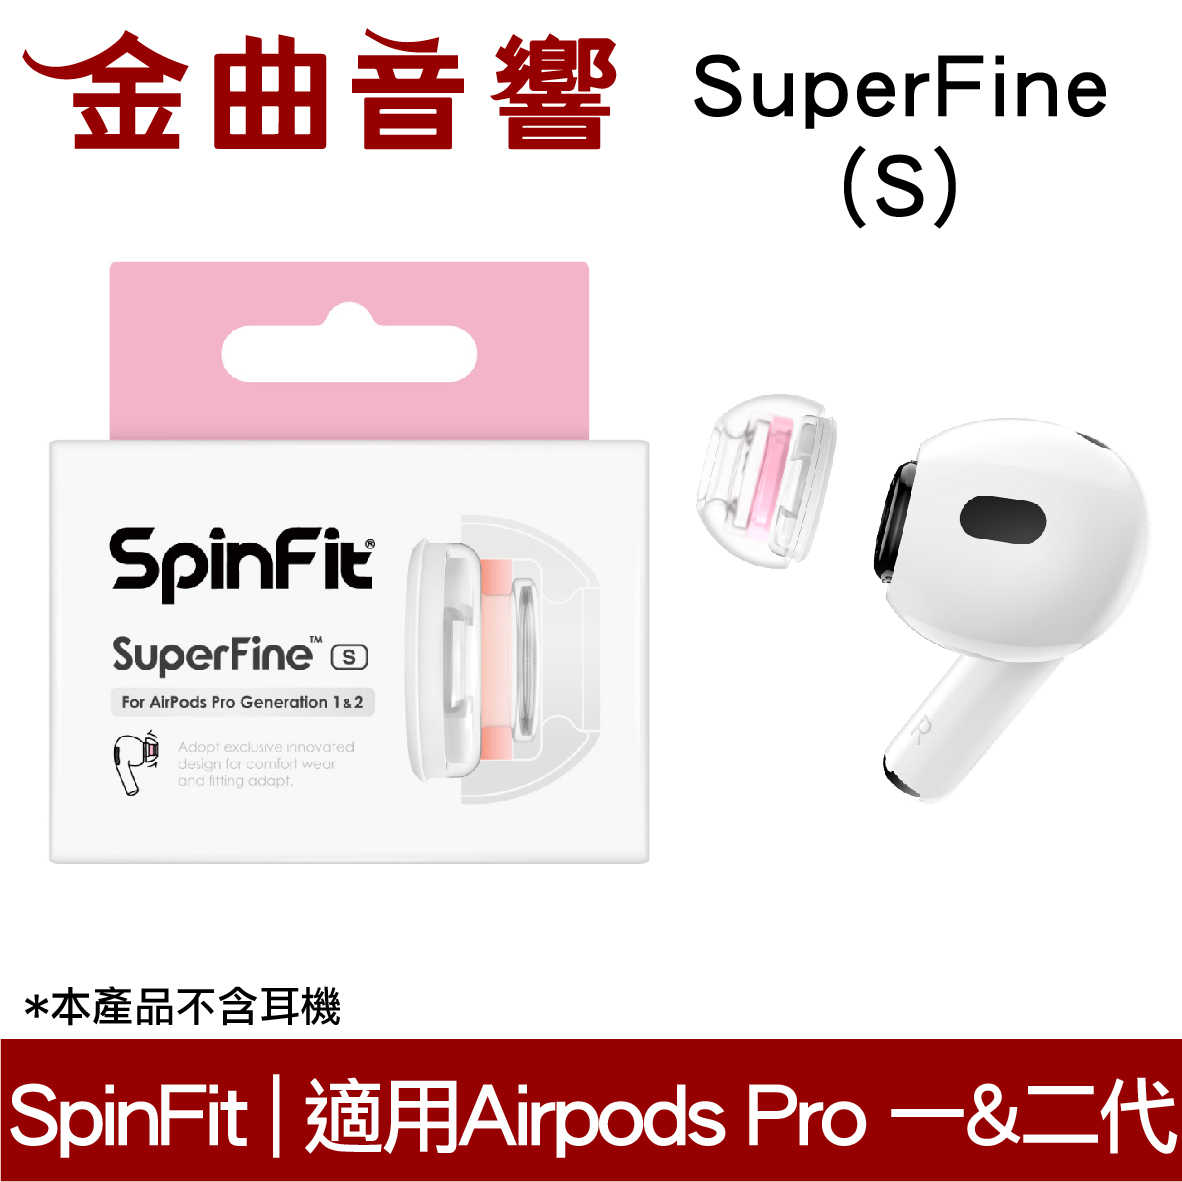 SpinFit SuperFine S Apple Airpods Pro 適用 矽膠耳塞 CP1025 | 金曲音響